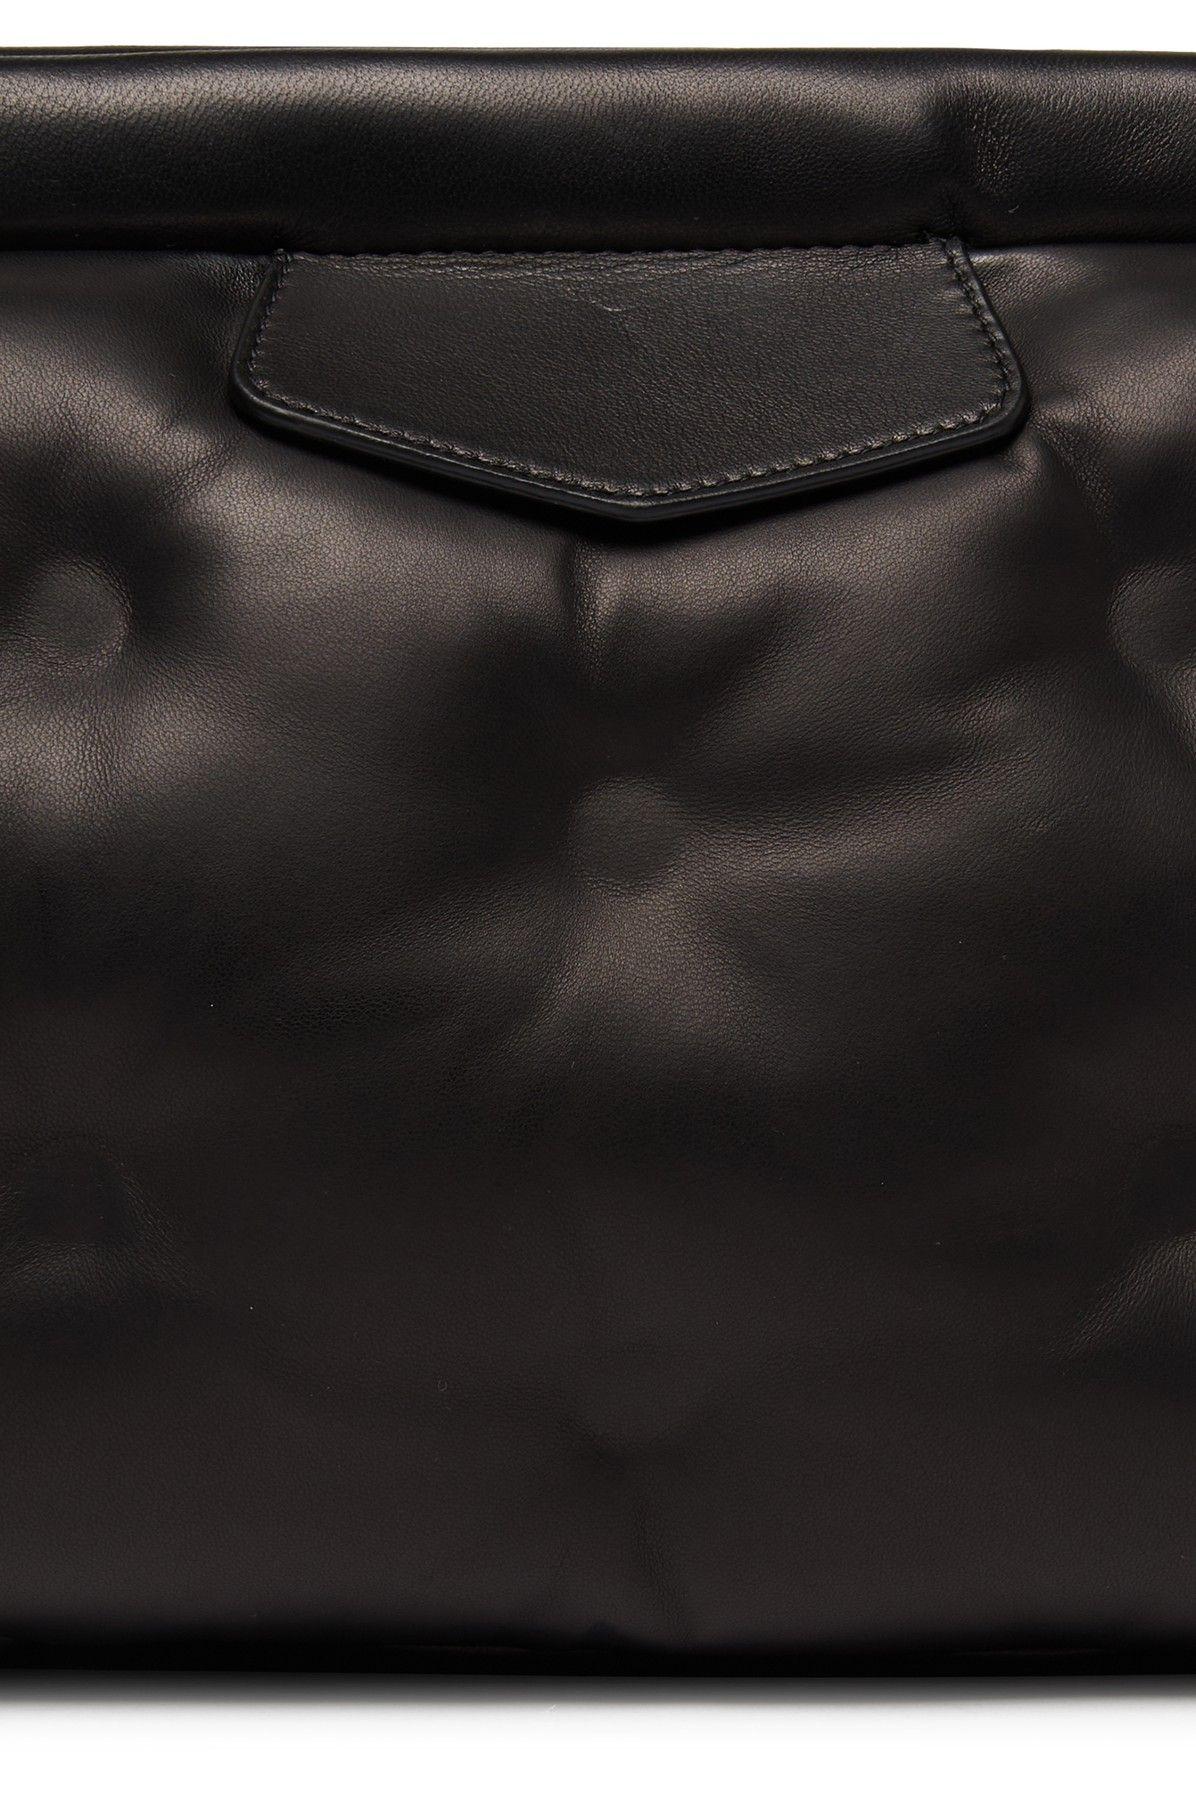 Maison Margiela Glam Slam Classique Small Bag in Black | Lyst